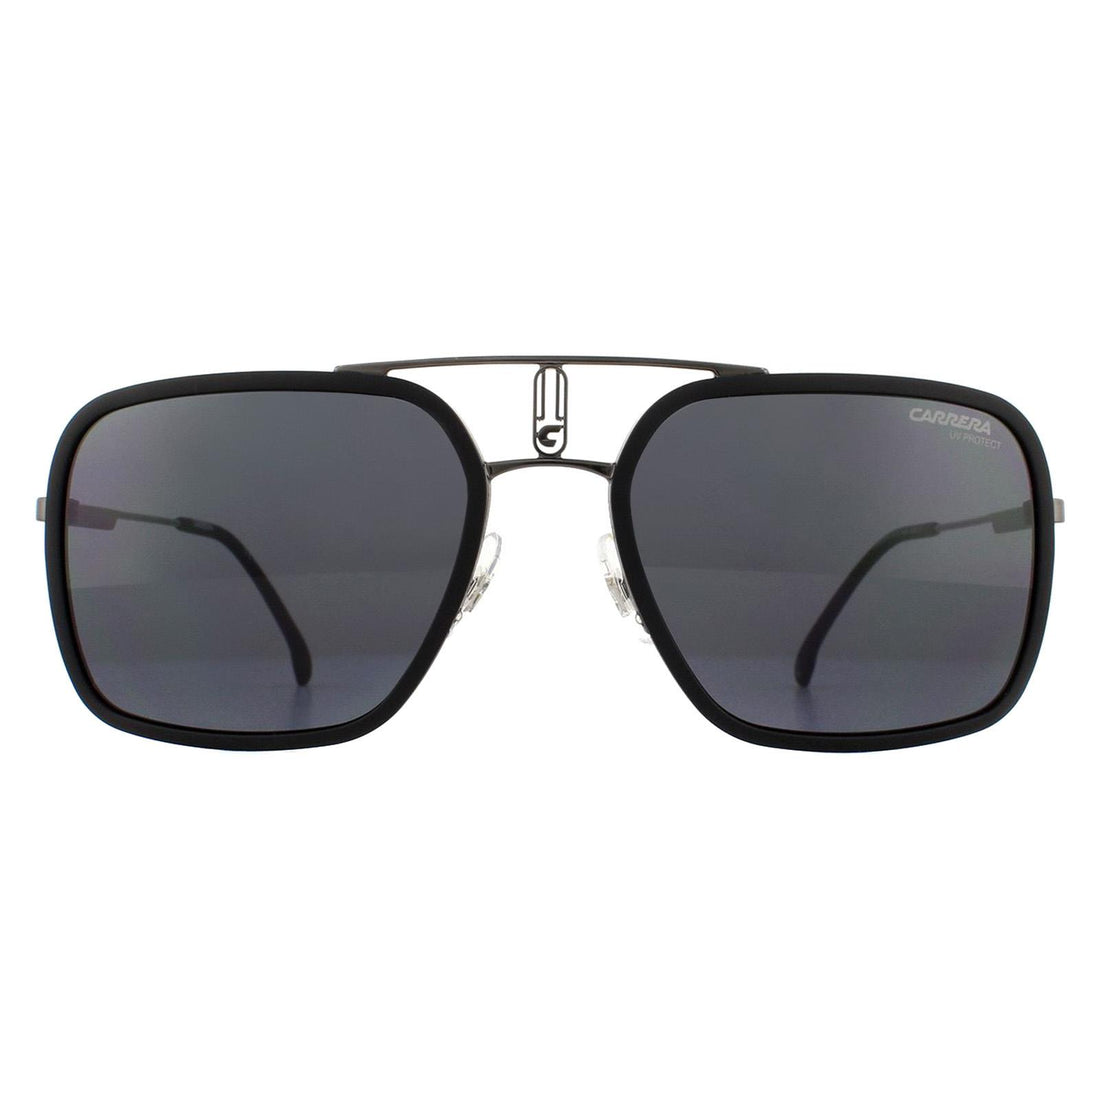 Carrera 1027/S Sunglasses